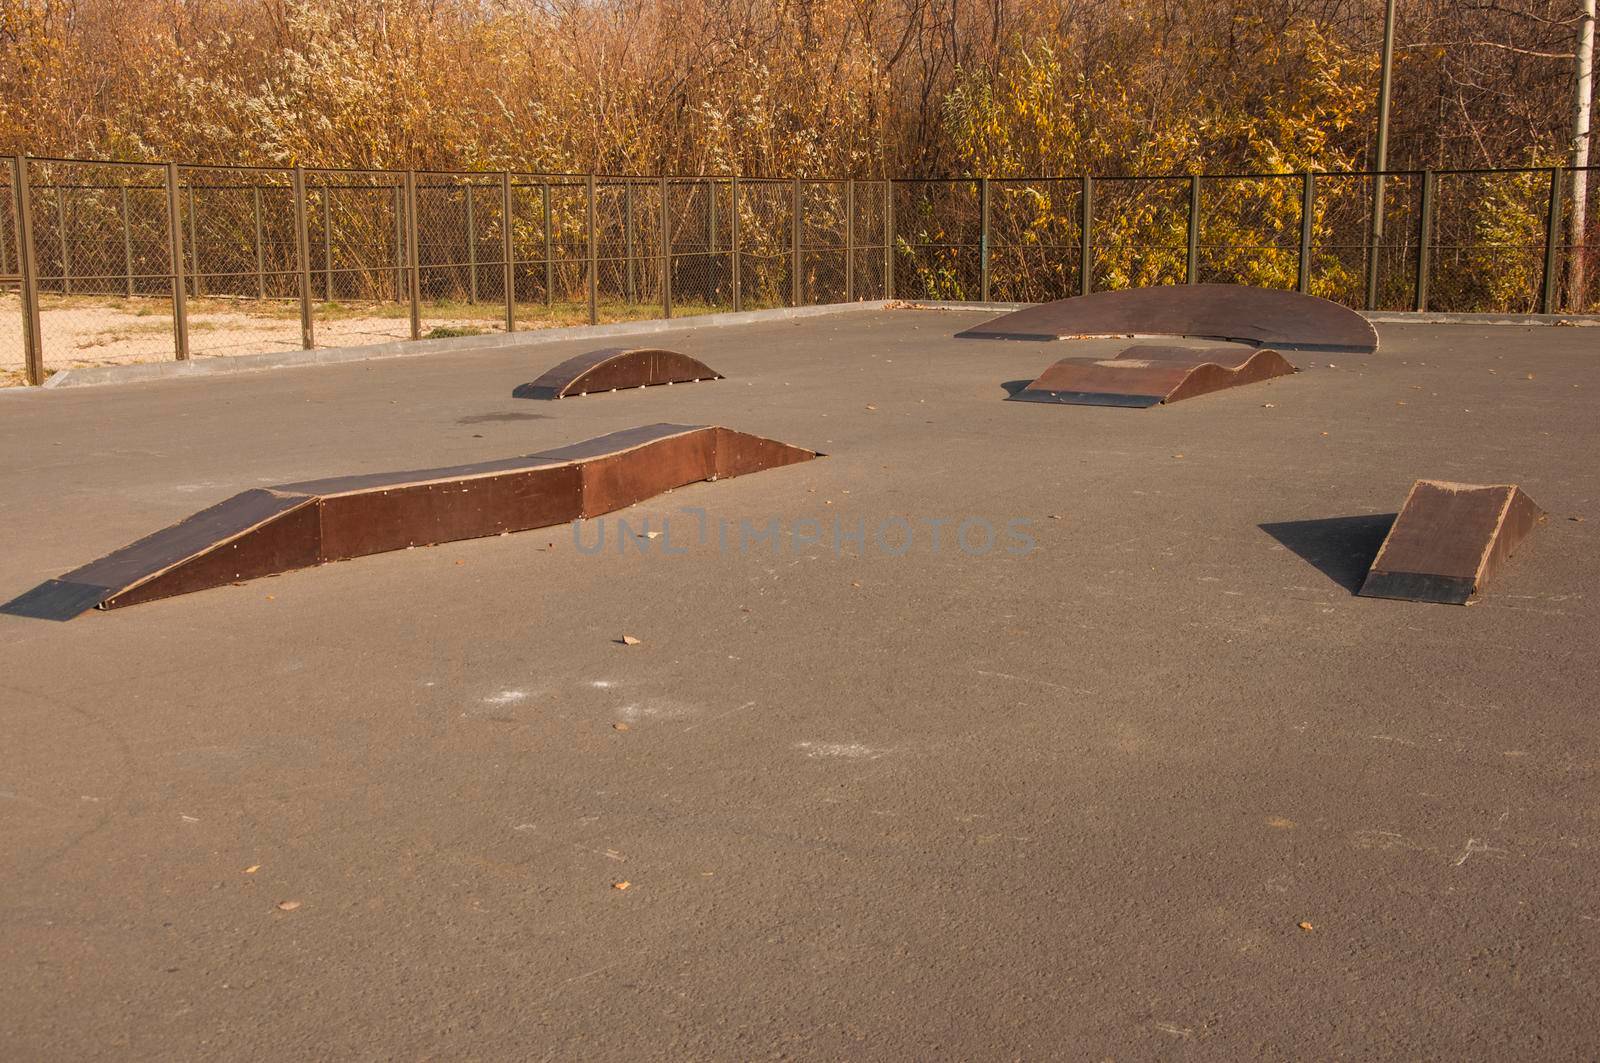 Closeup of outdoor skate board park